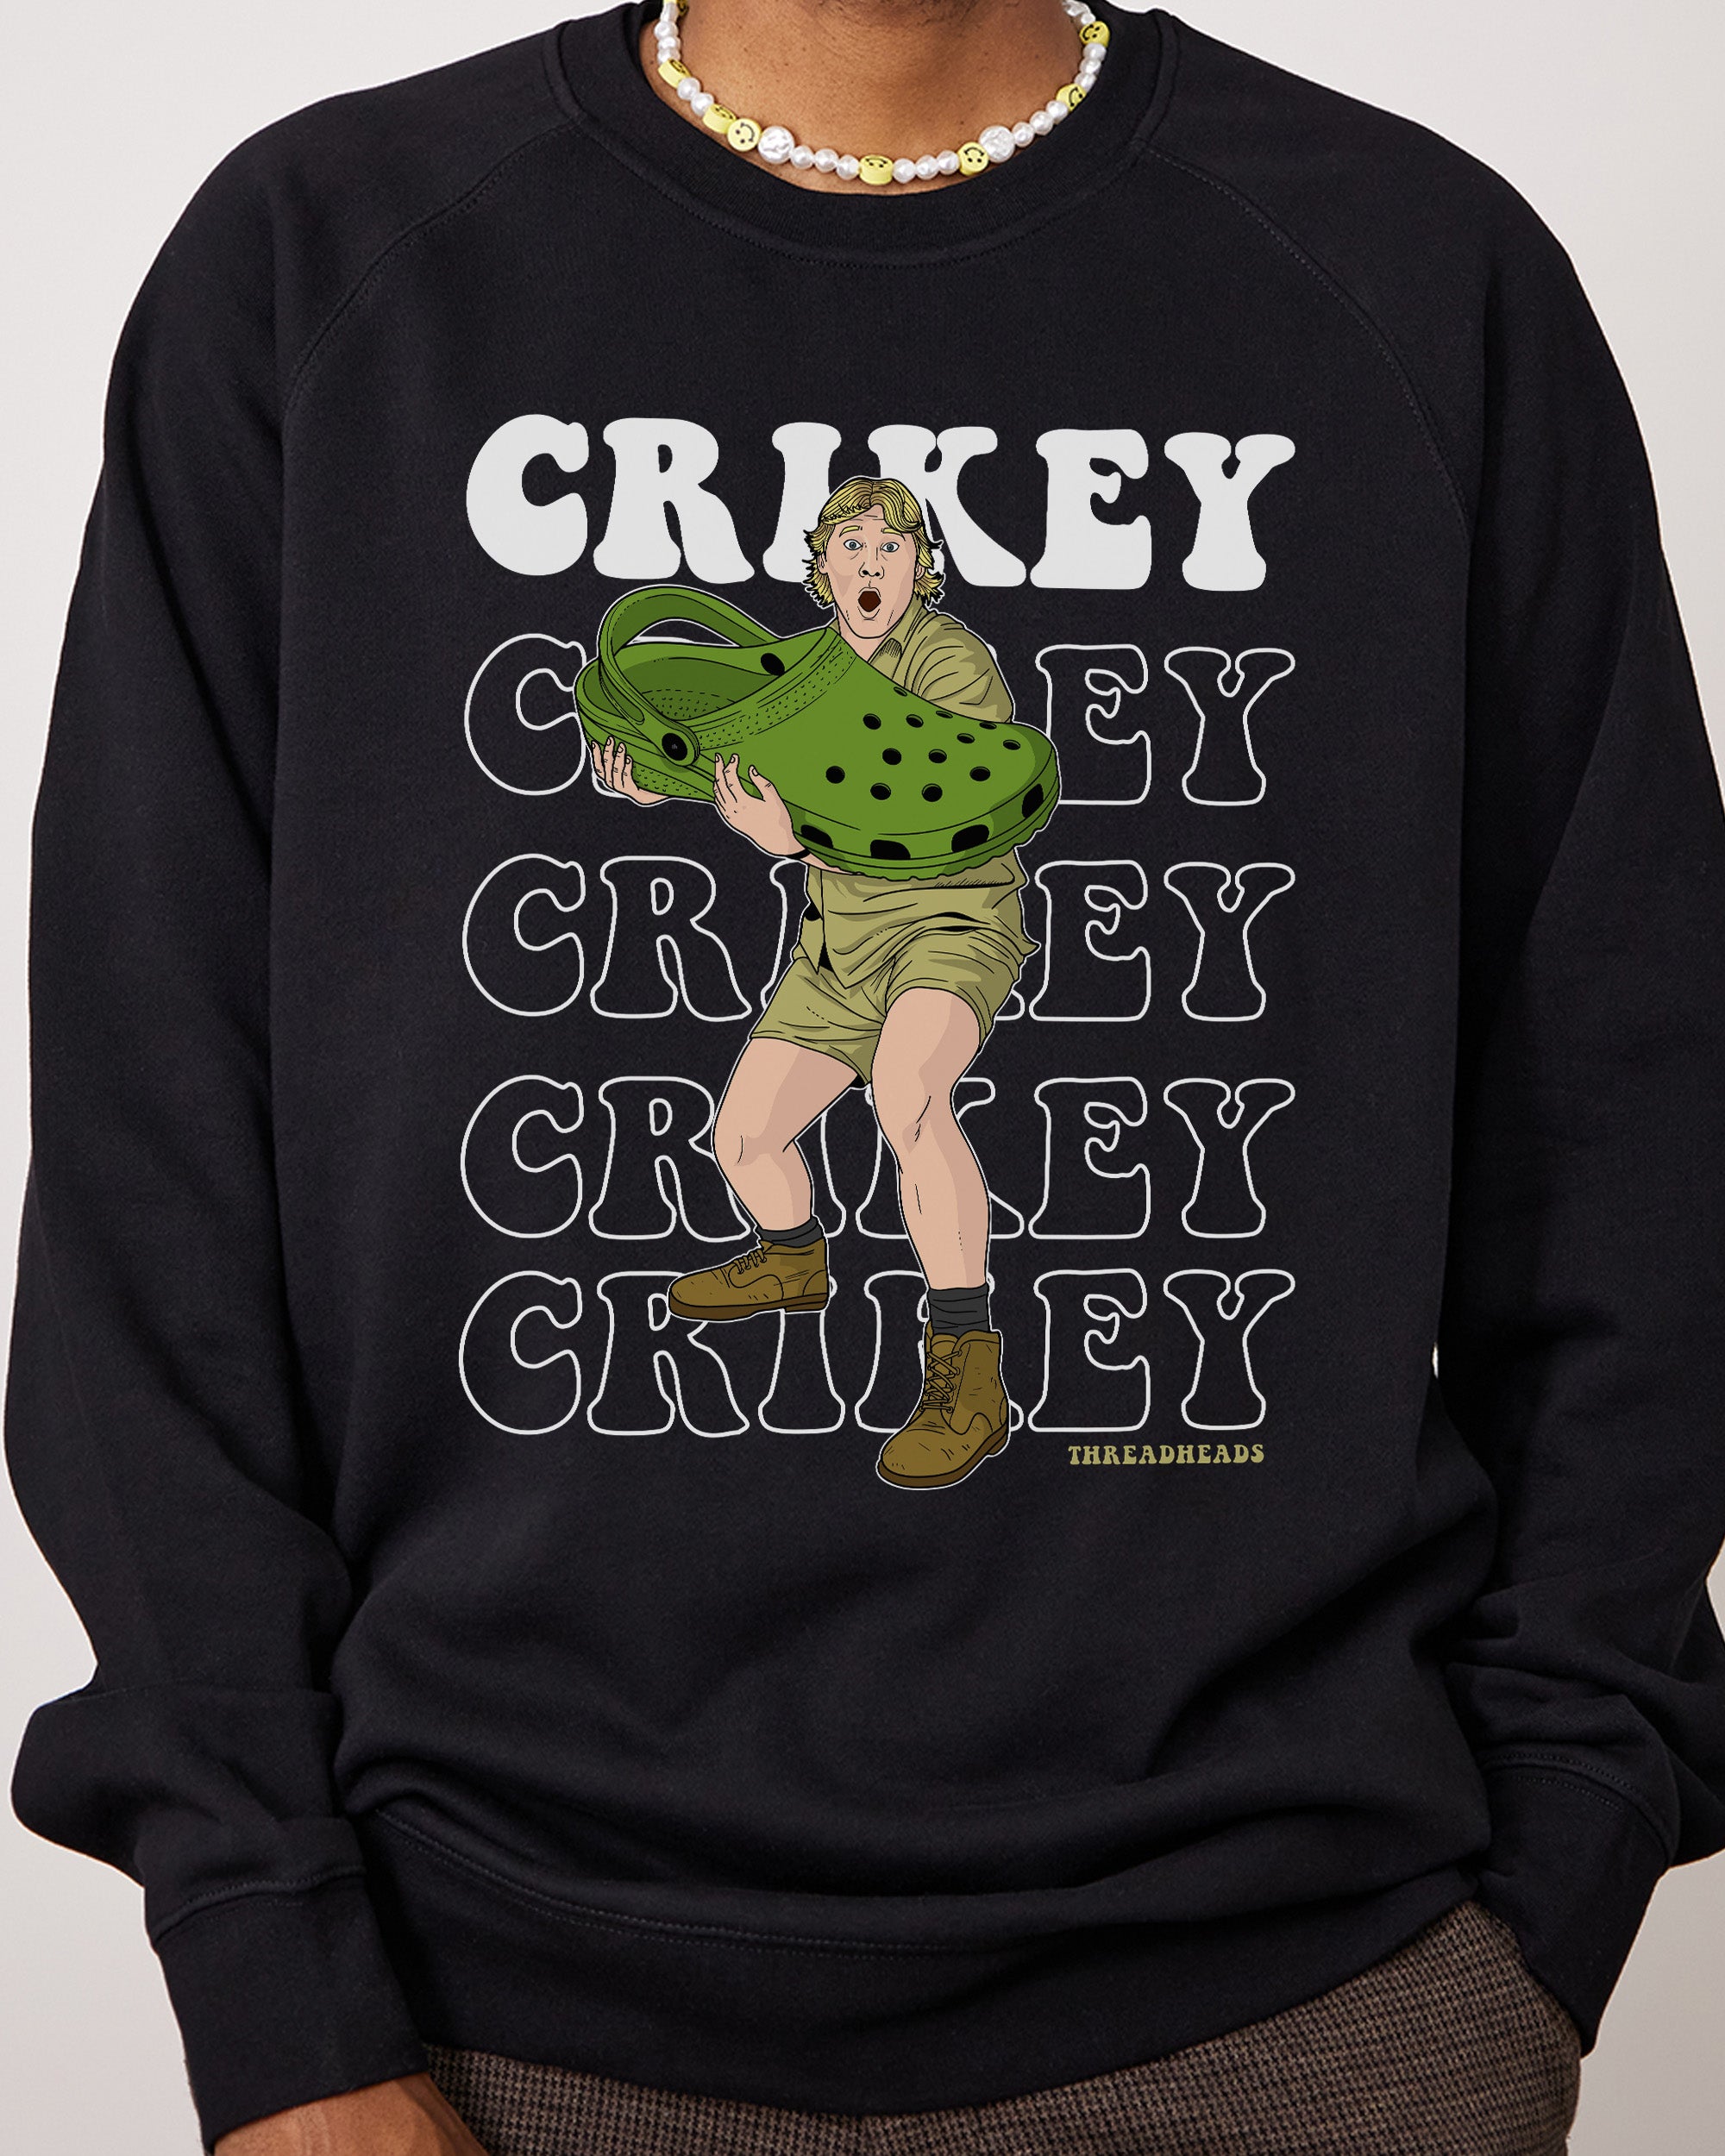 Crikey Sweater Australia Online